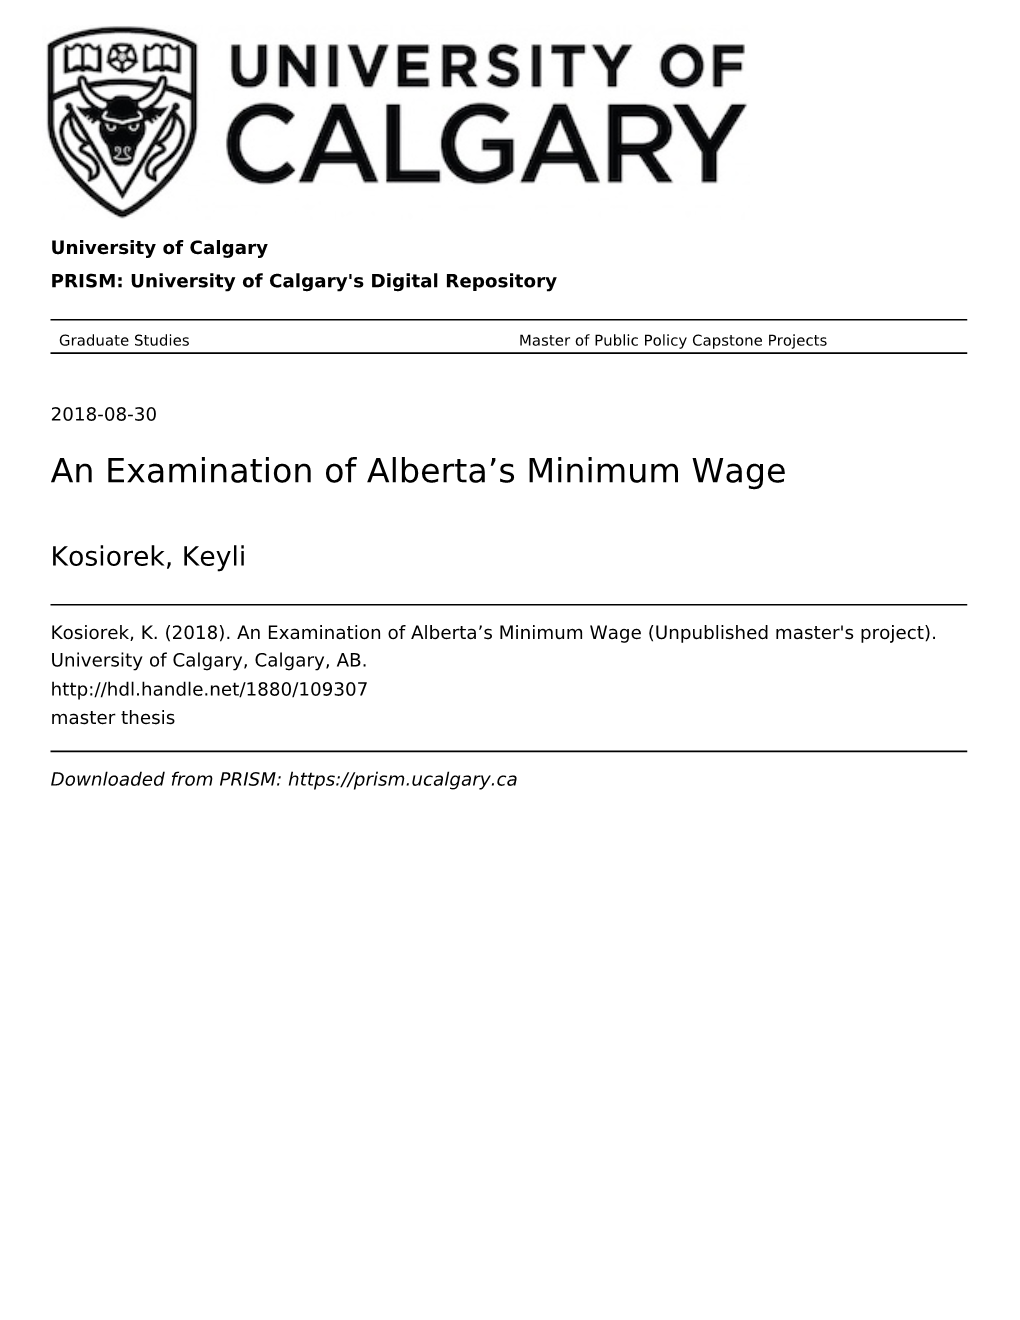 An Examination of Alberta's Minimum Wage